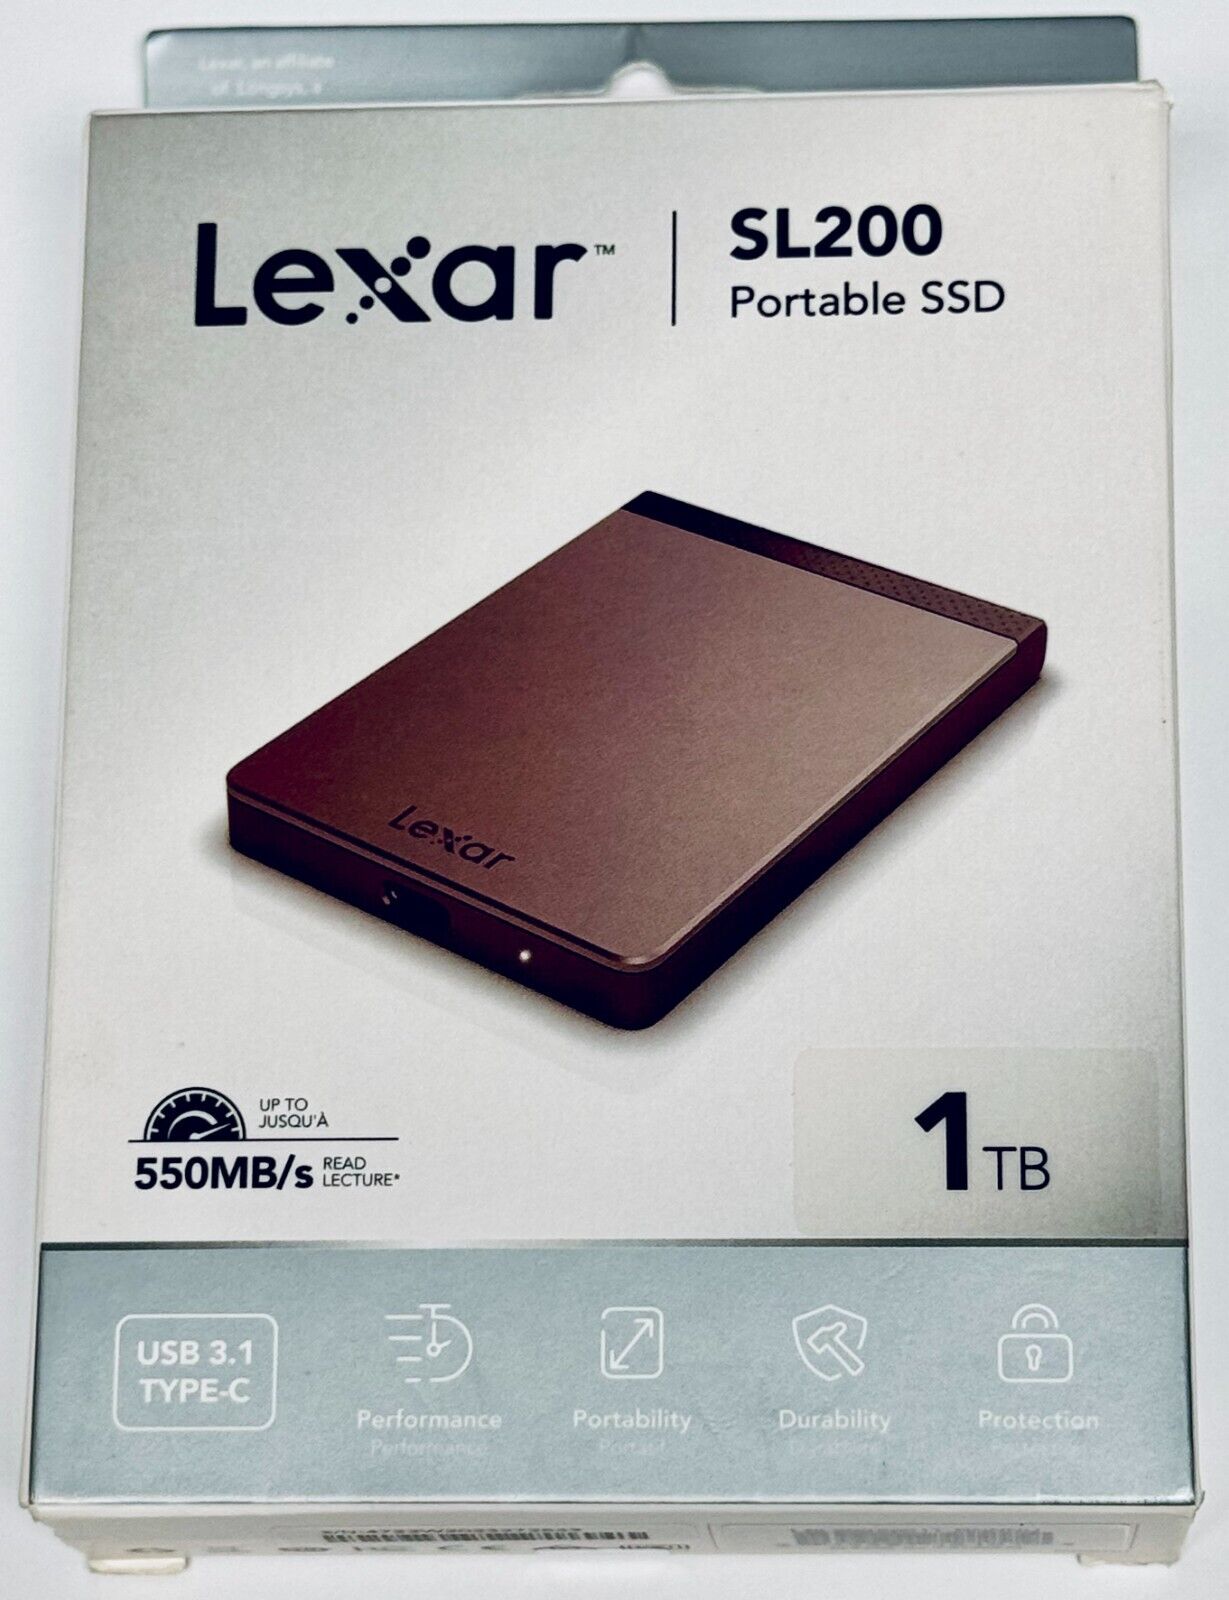 Lexar SL200 Portable SSD 1TB/ USB 3.1 Type C External-Brand New